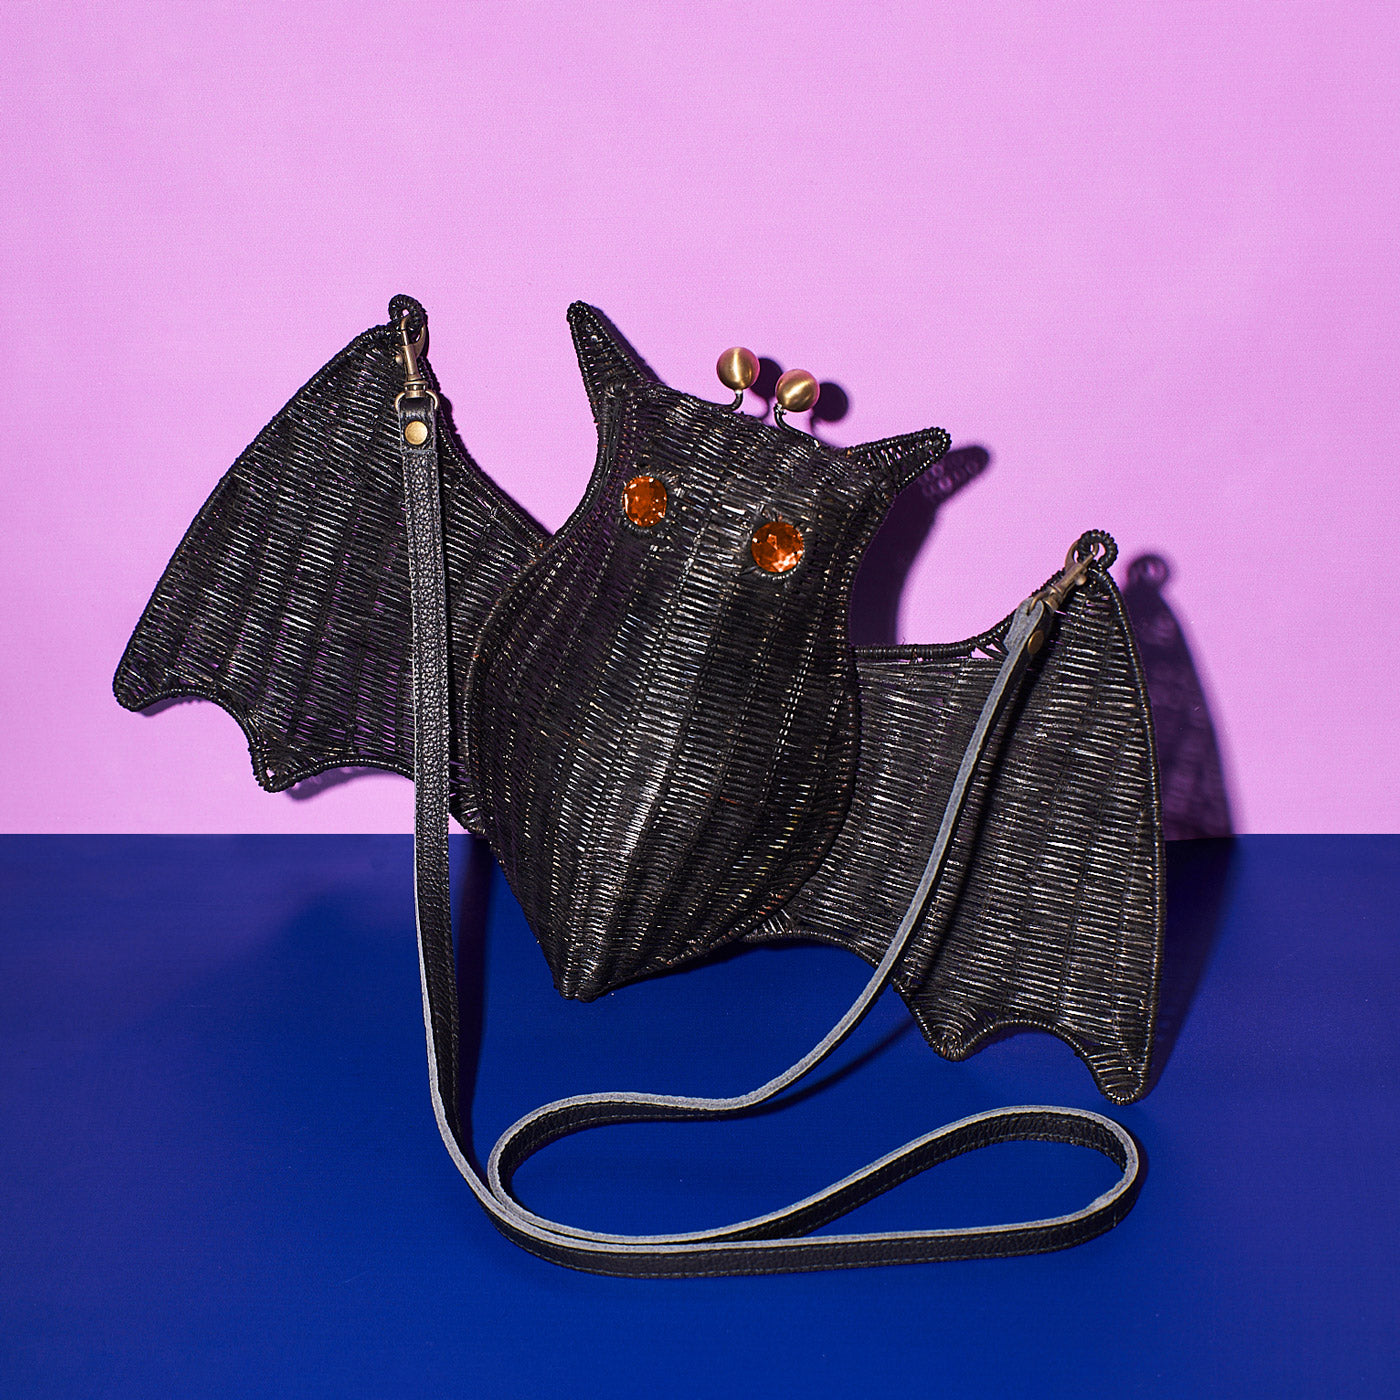 Wicker Darling's Elizabat Bathory the bat purse